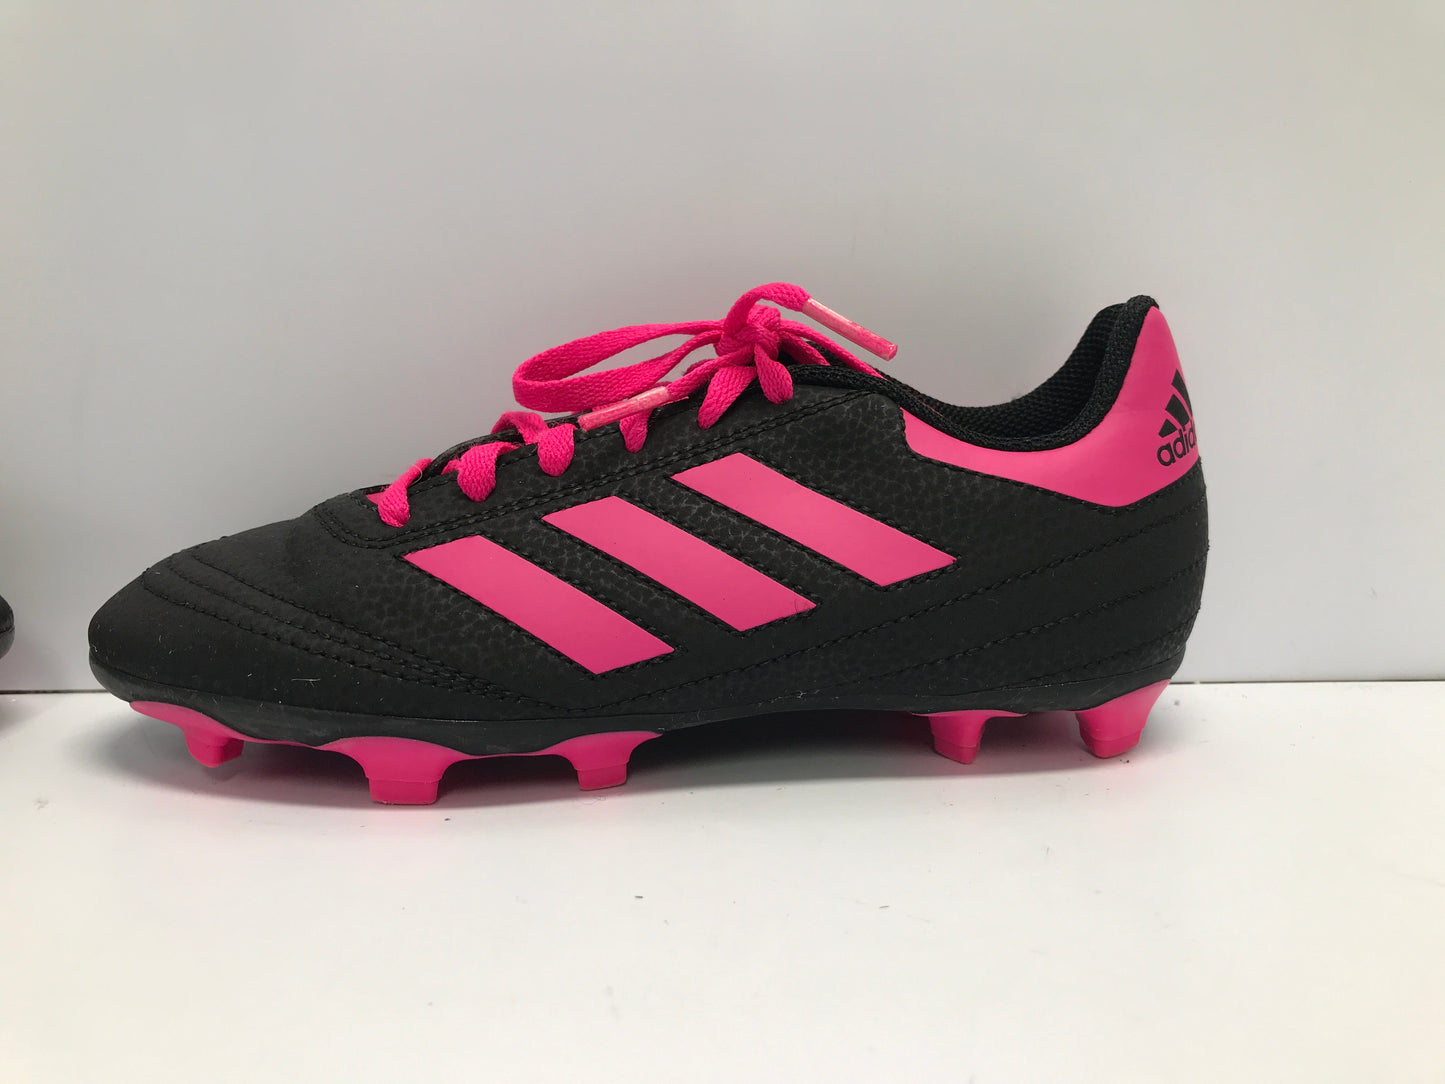 Soccer Shoes Cleats Child Size 2 Adidas Black Fushia Pink Like New